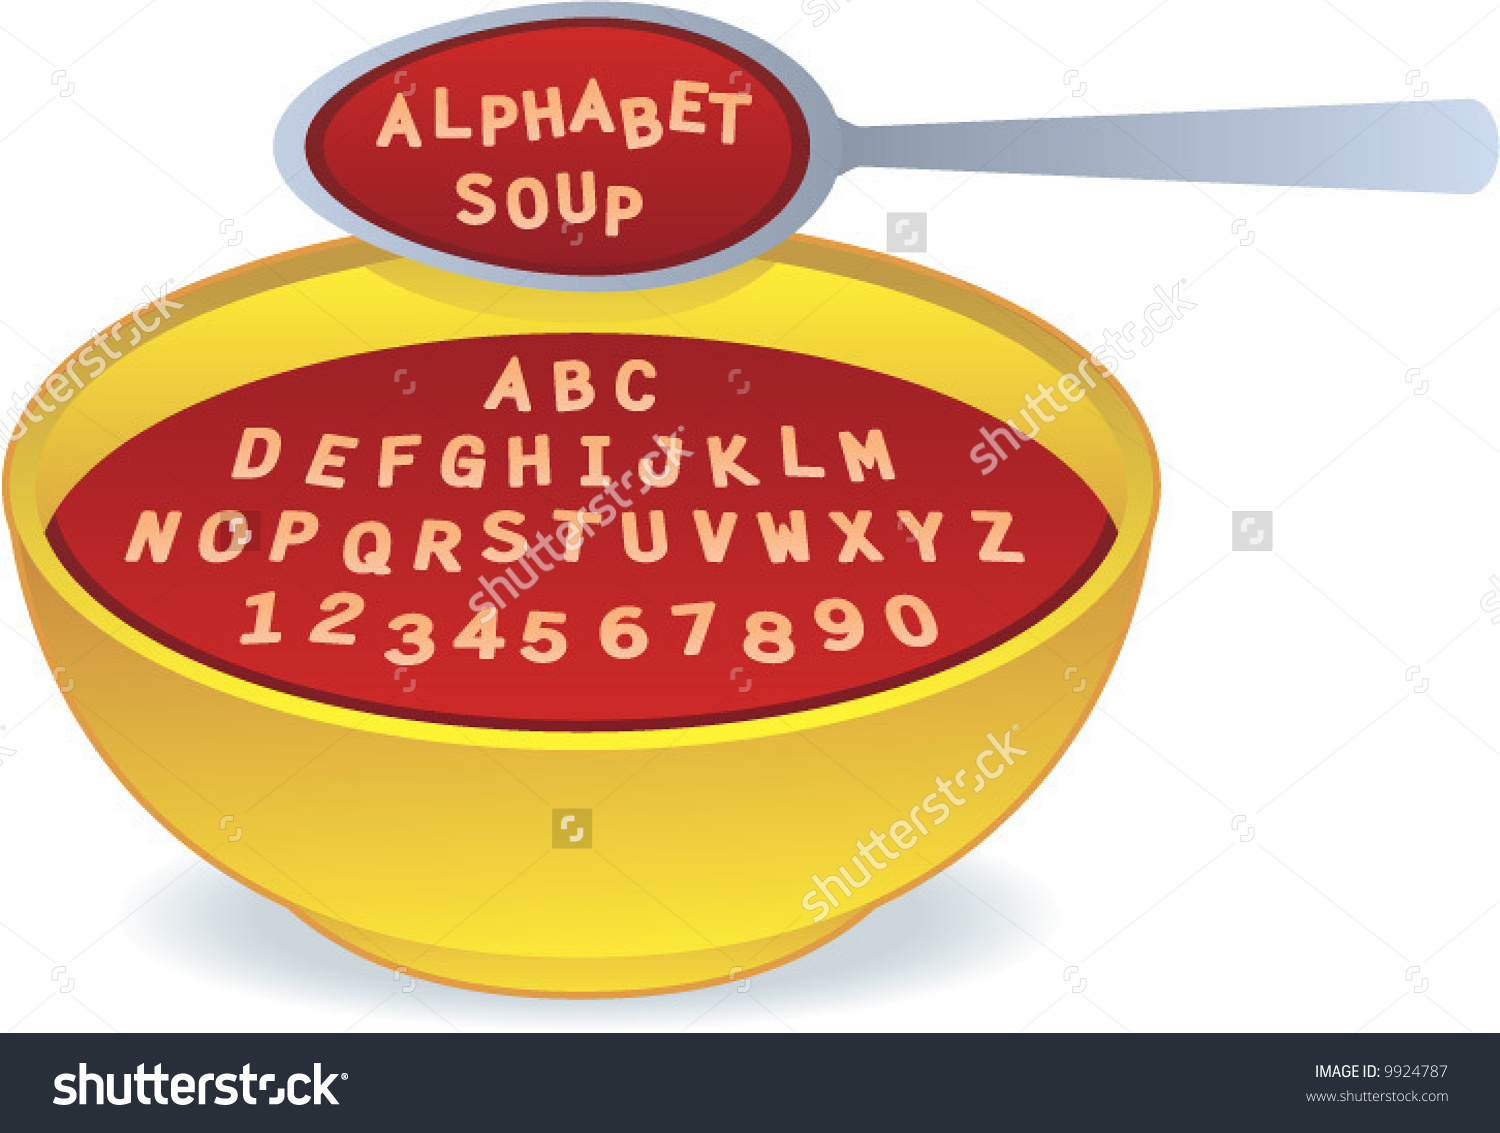 alphabet soup spell words alphabet cereal generator